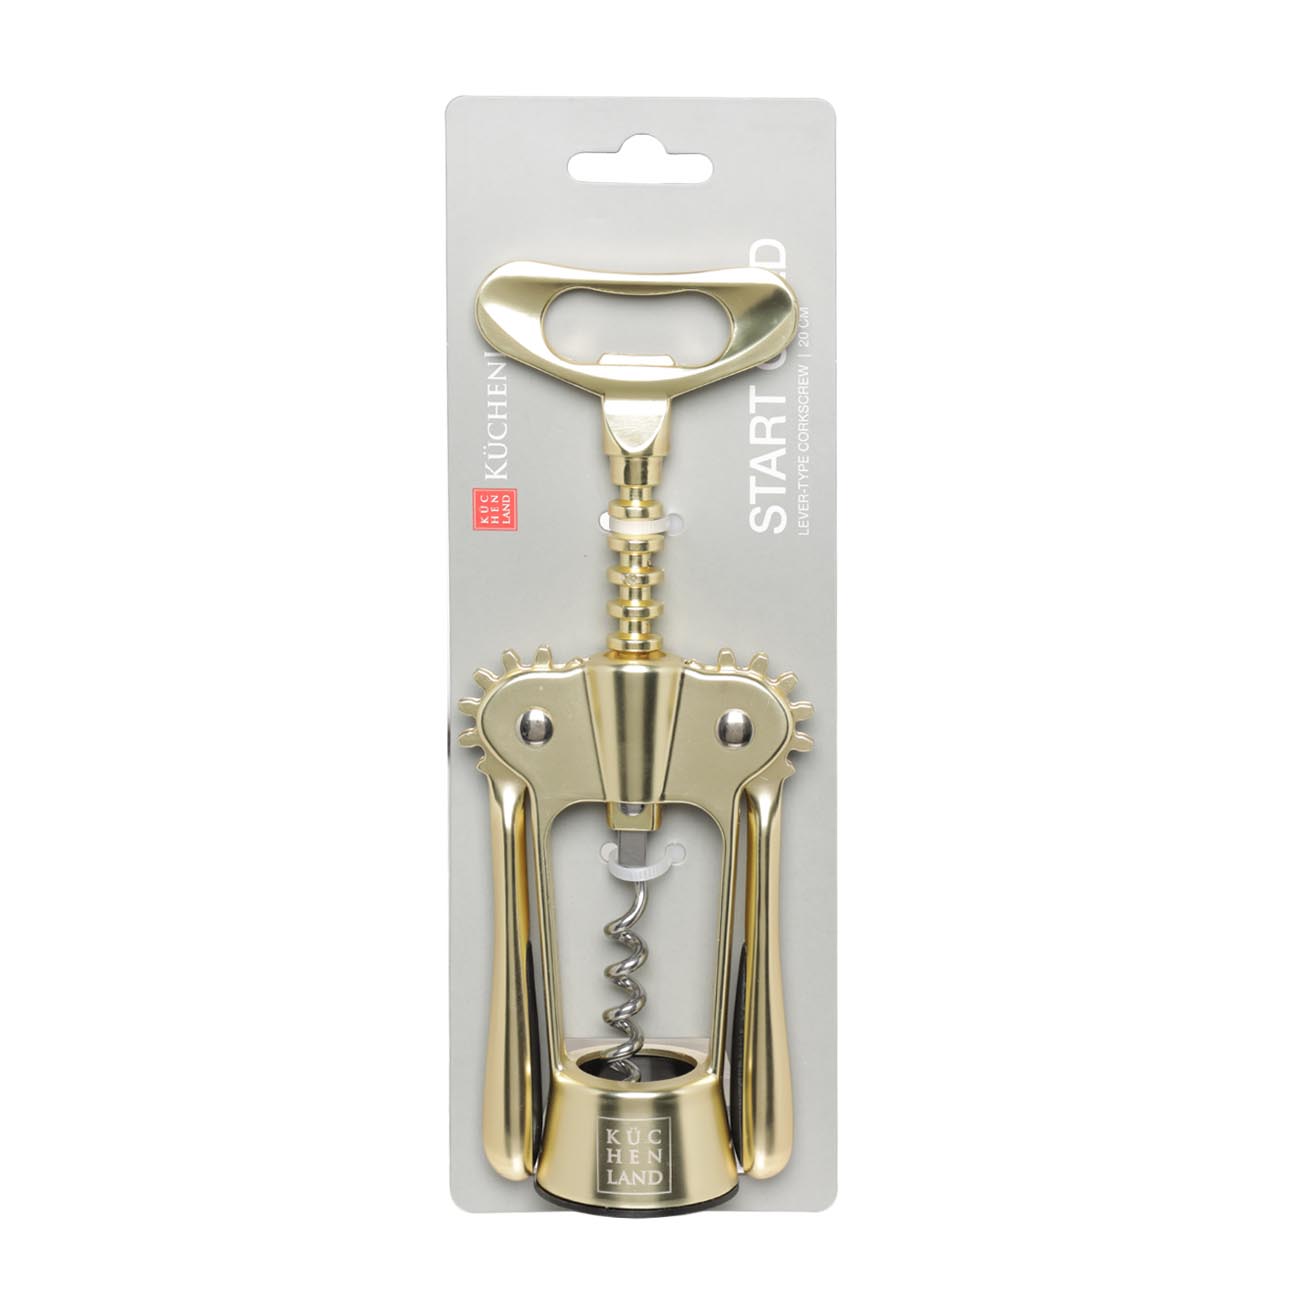 Lever corkscrew, 20 cm, metal / plastic, golden, Start gold изображение № 2